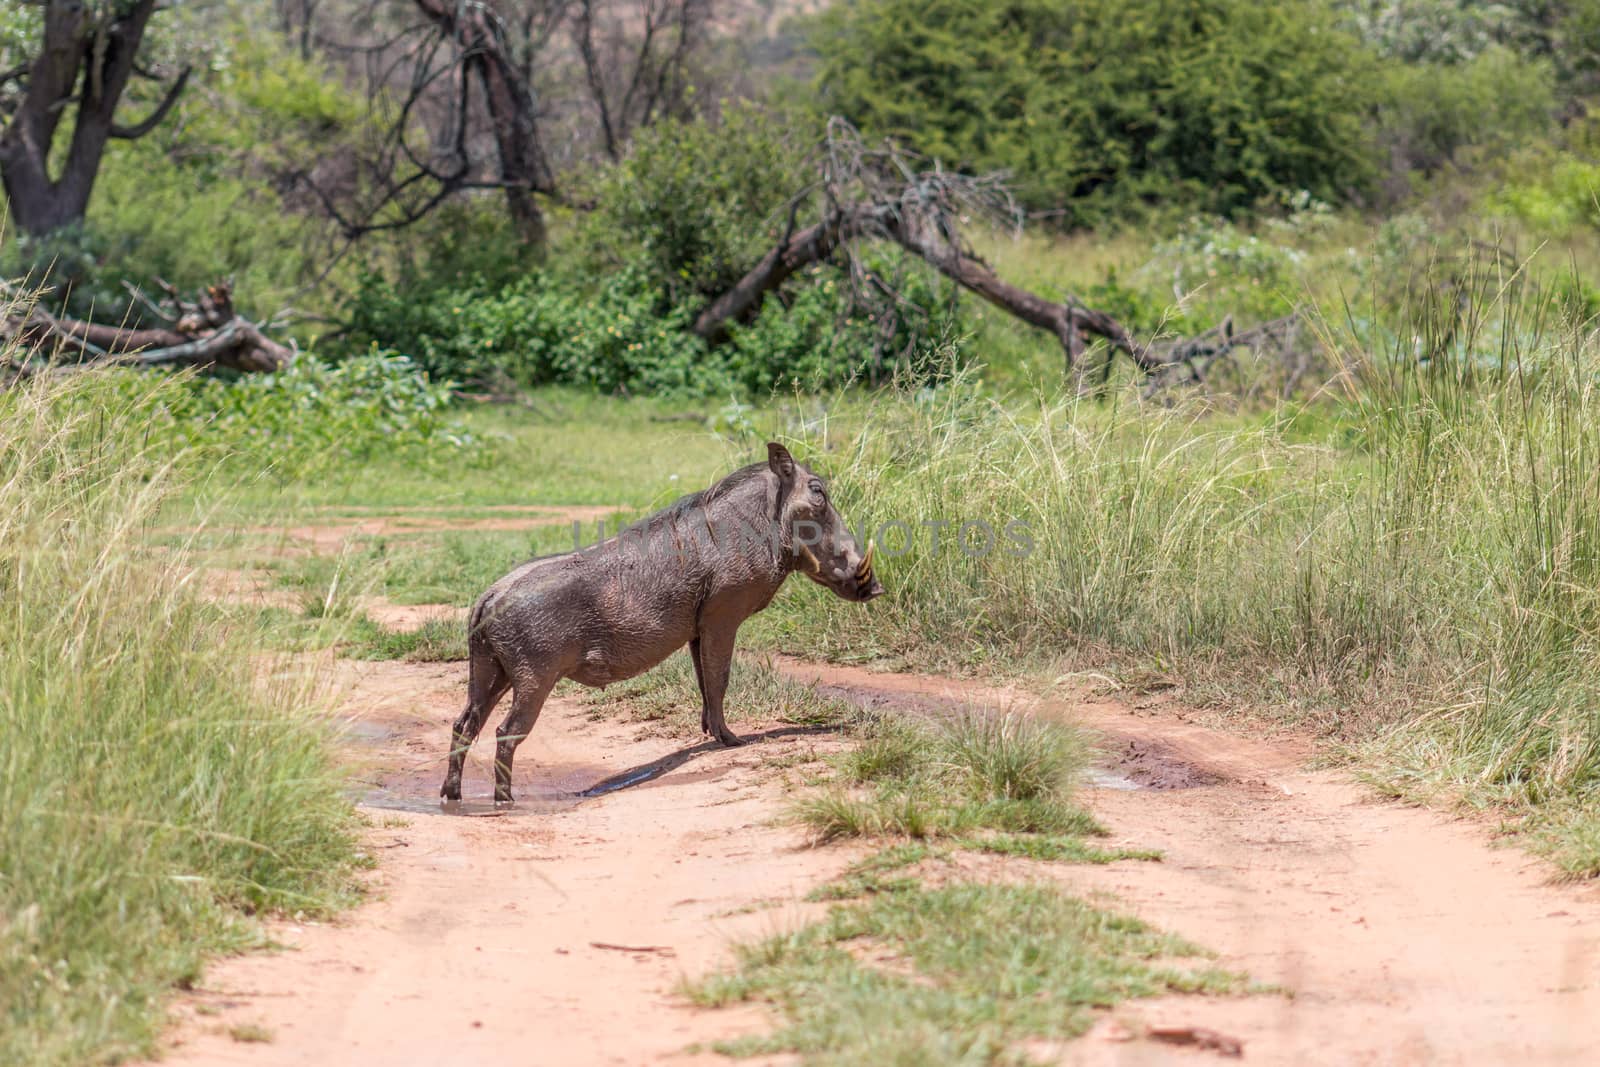 Common warthog (Phacochoerus africanus) by RiaanAlbrecht